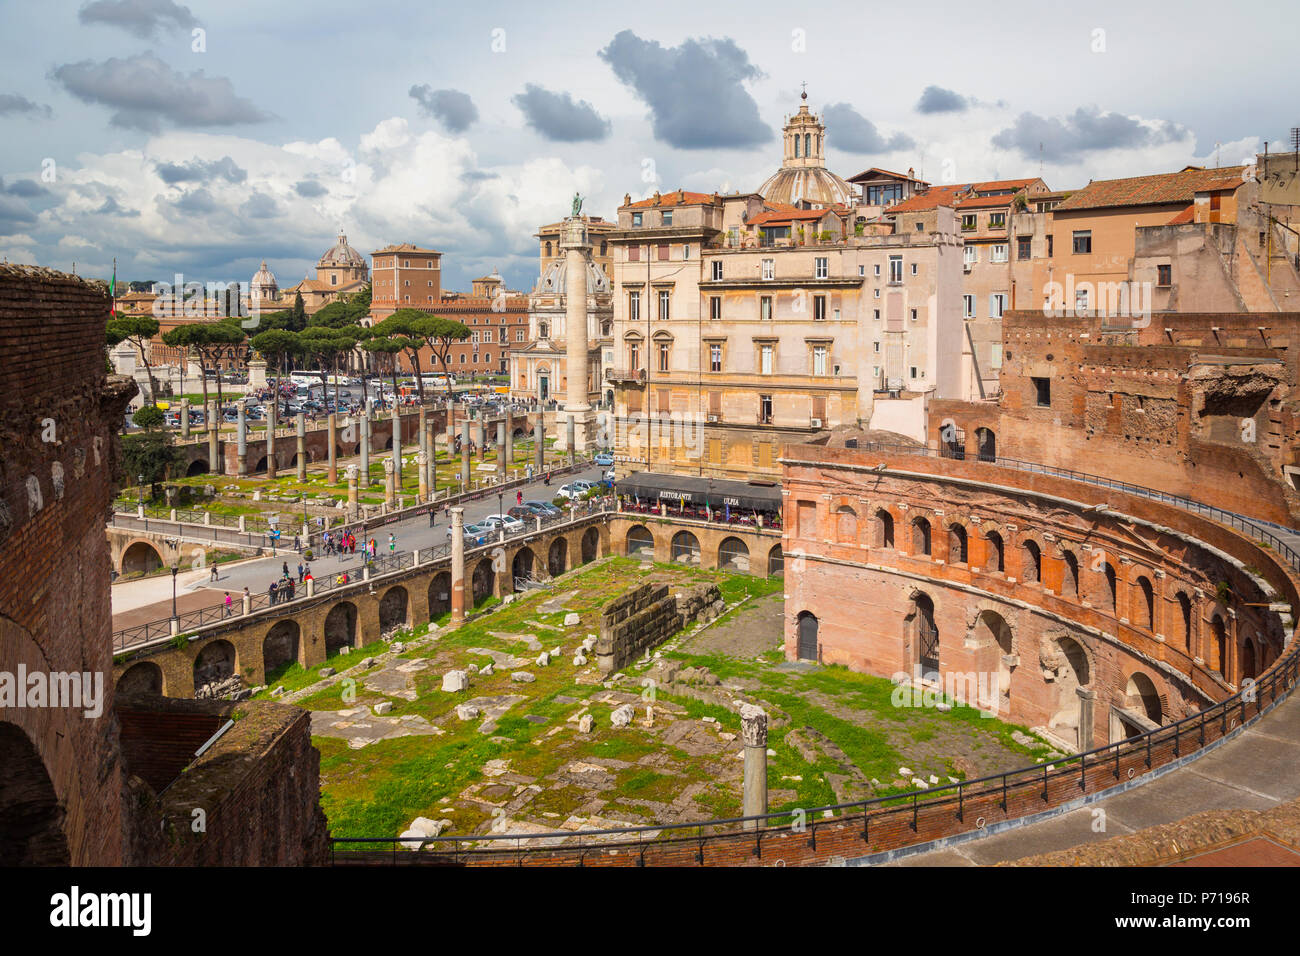 Roma, Italia. Foro de Trajano. El centro histórico de Roma es un sitio del Patrimonio Mundial de la UNESCO. Foto de stock